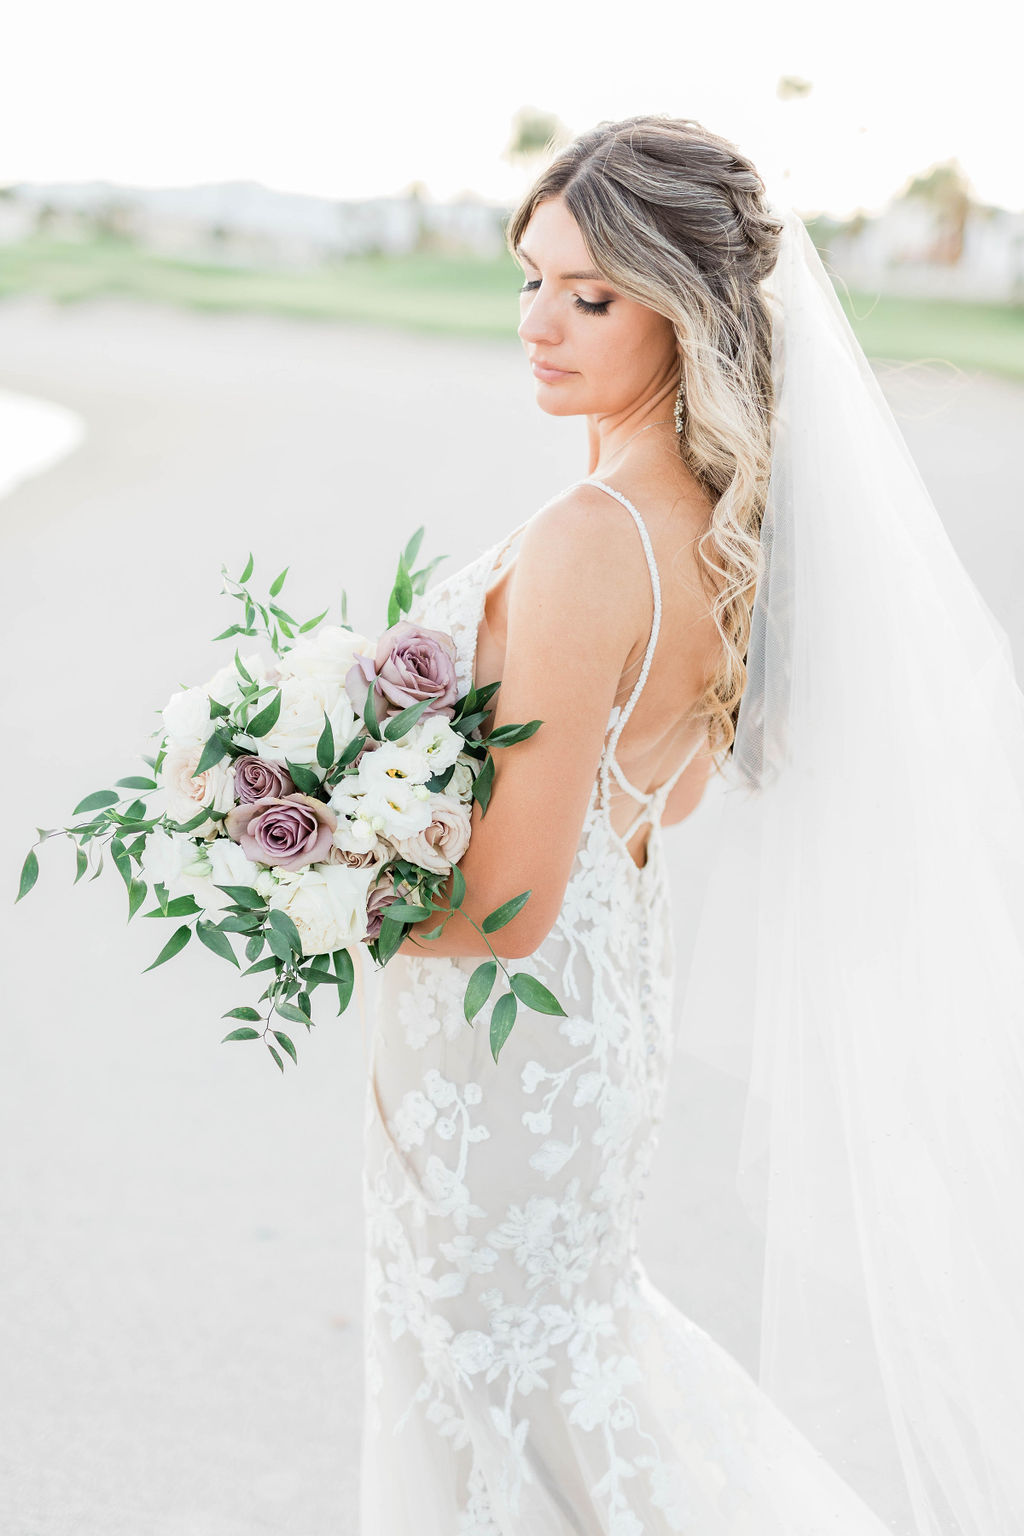 15 Beautiful Veiled Short Wedding Hairstyles